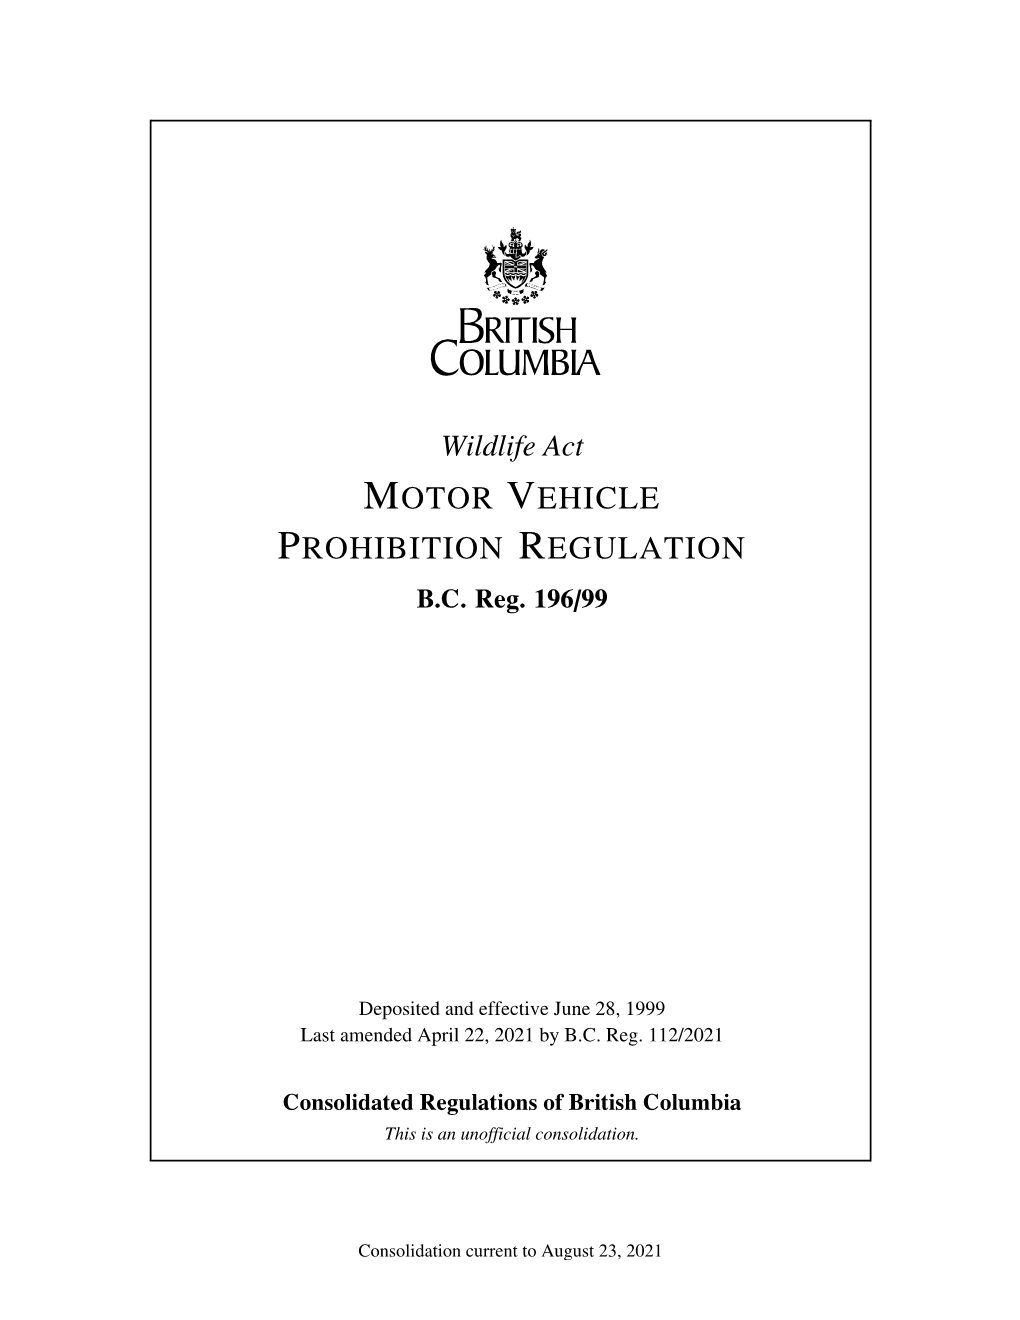 Motor Vehicle Prohibition Regulation B.C